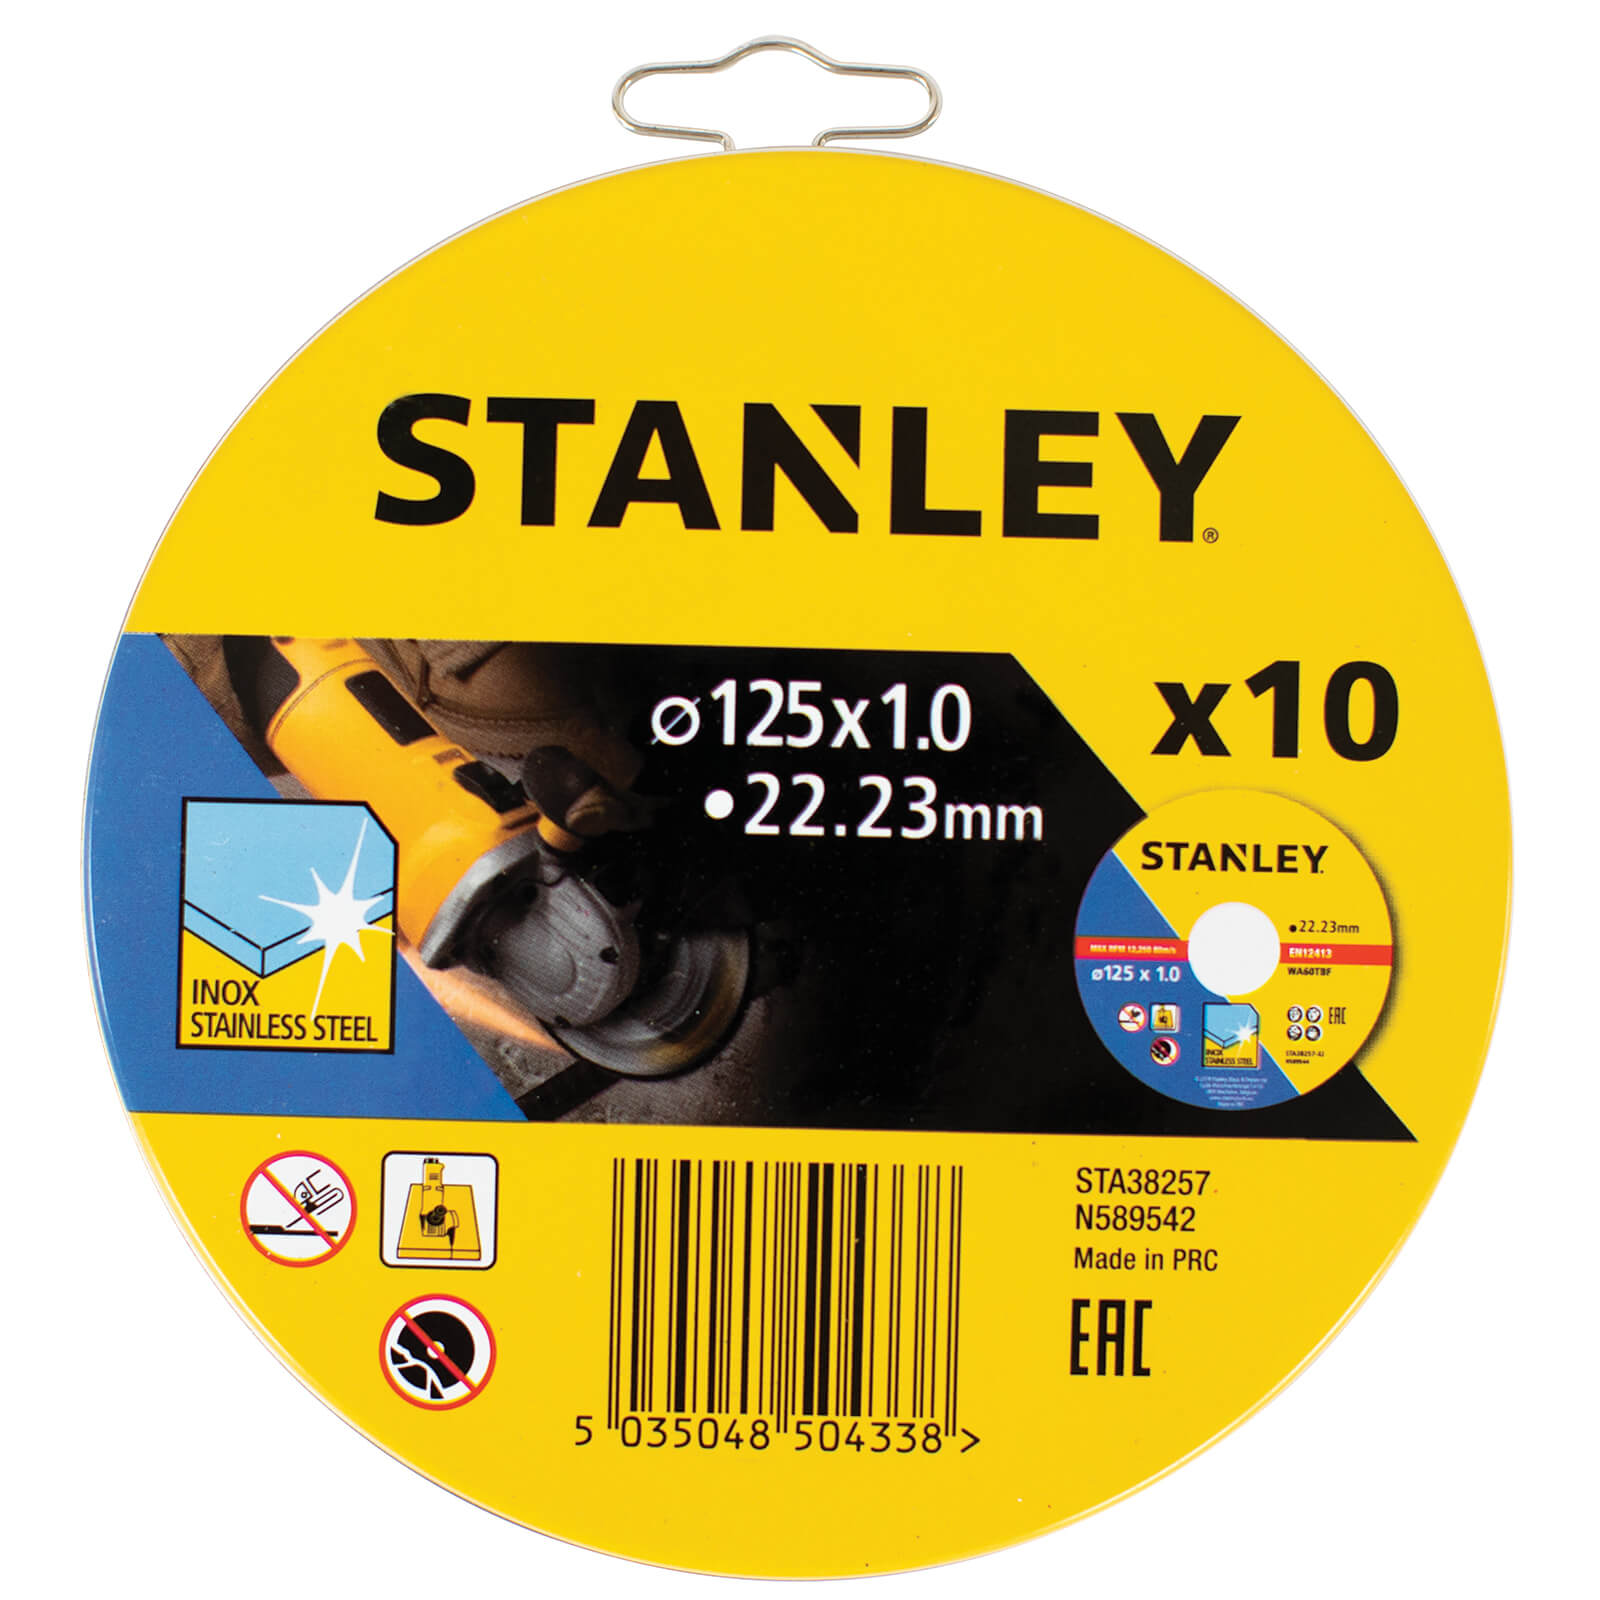 STANLEY 10x Cutting Discs - 125 x 1mm